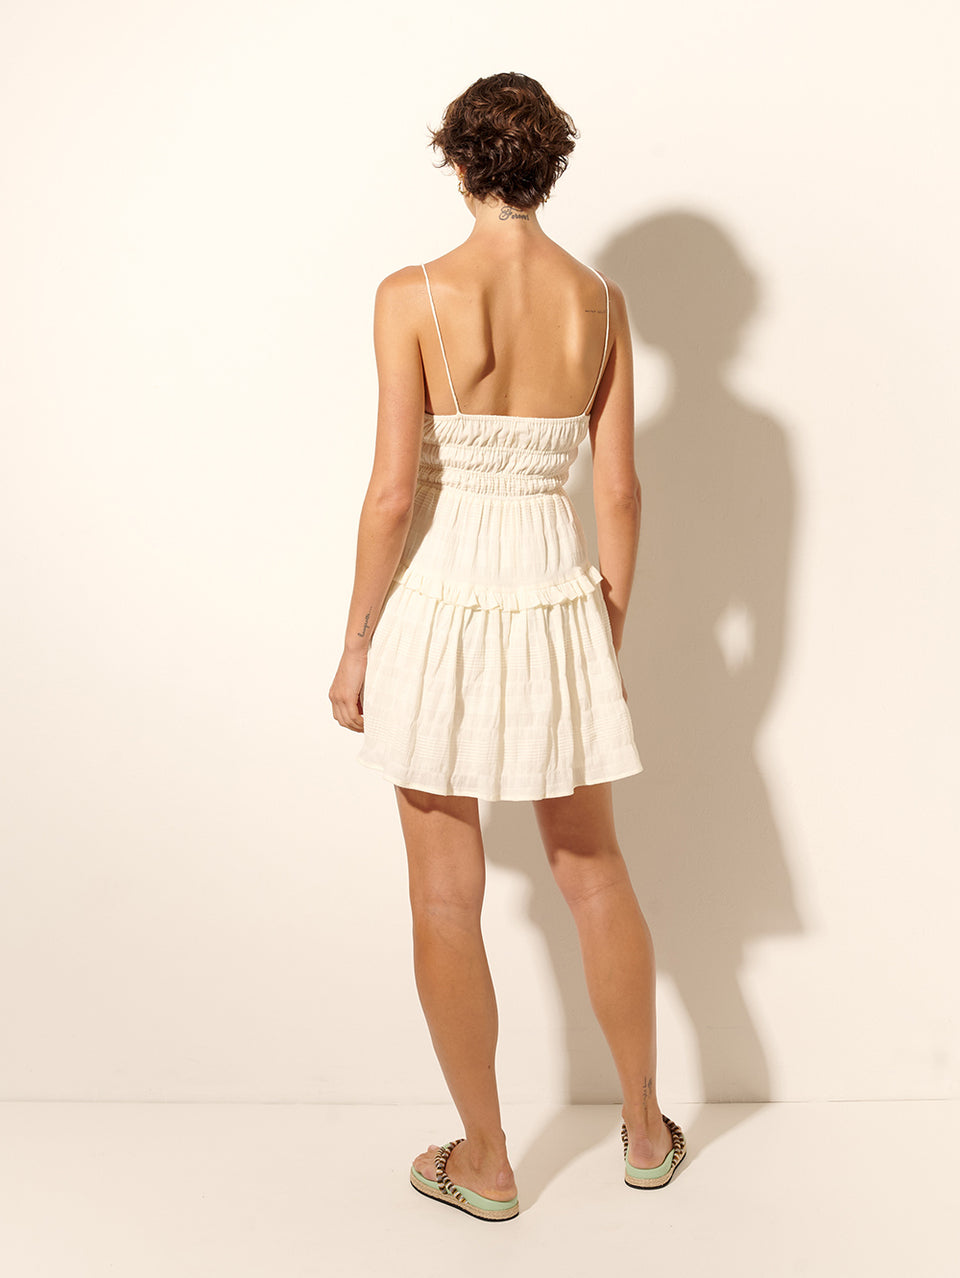 Dream Mini Dress KIVARI | Model wears cream mini dress back view